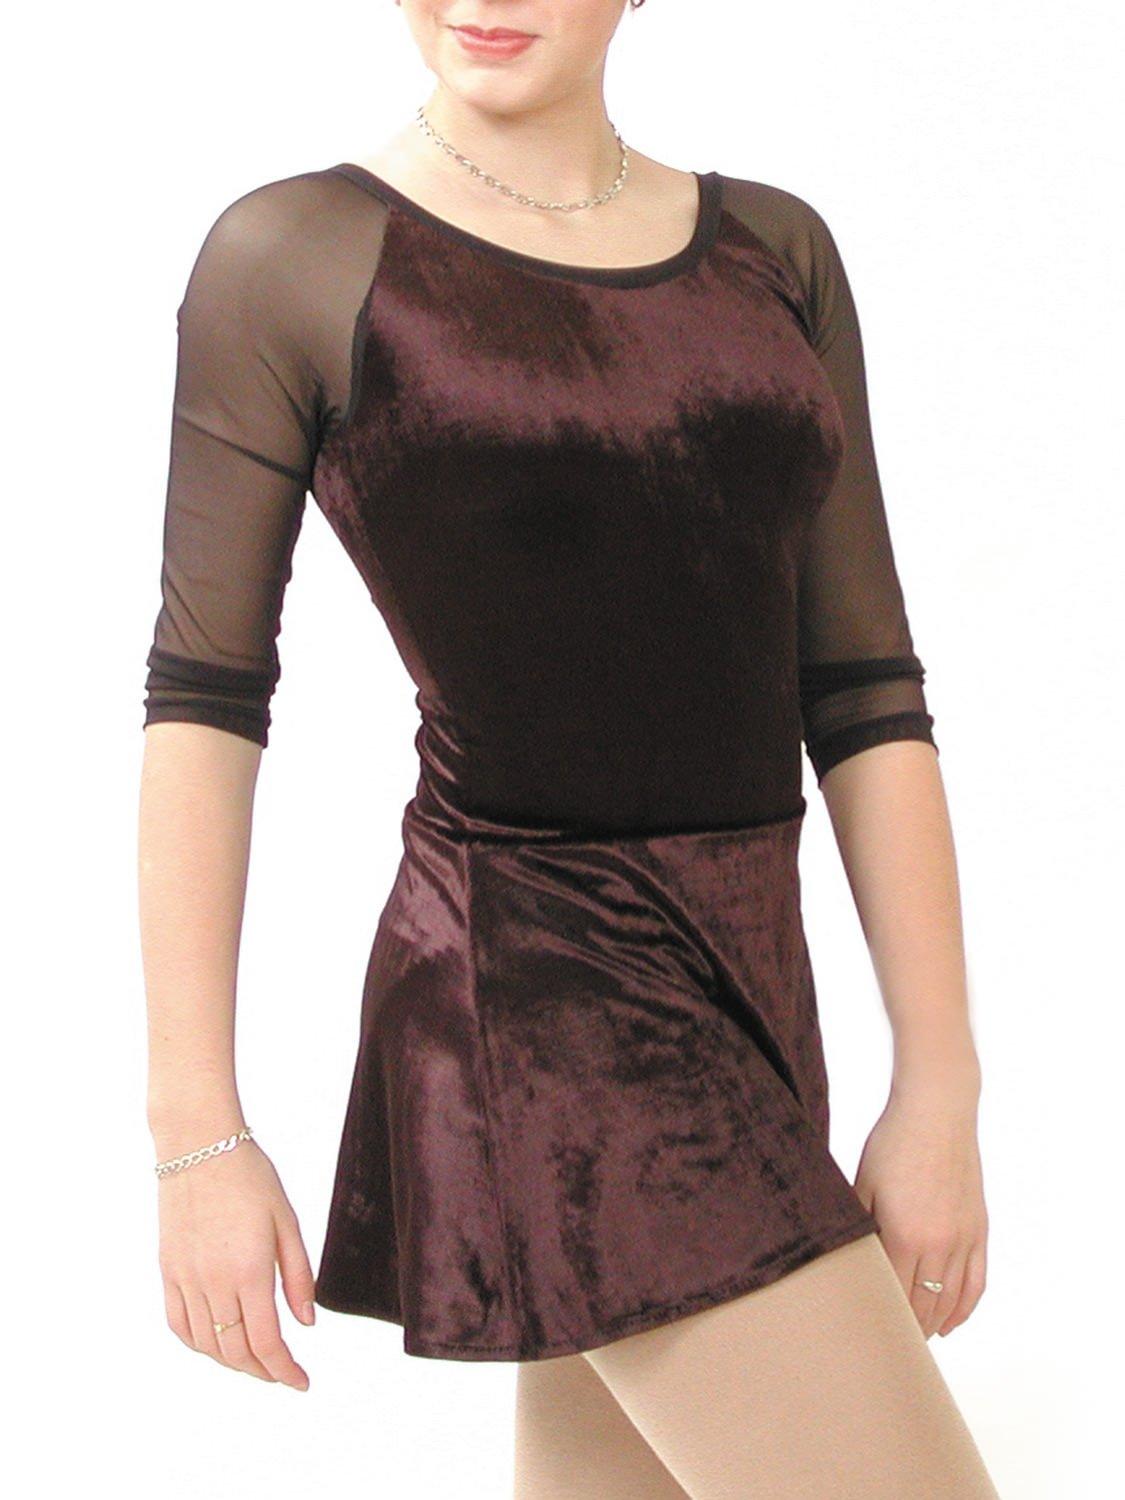 Jalie 2104 - Raglan-Sleeved Skating Dress Pattern